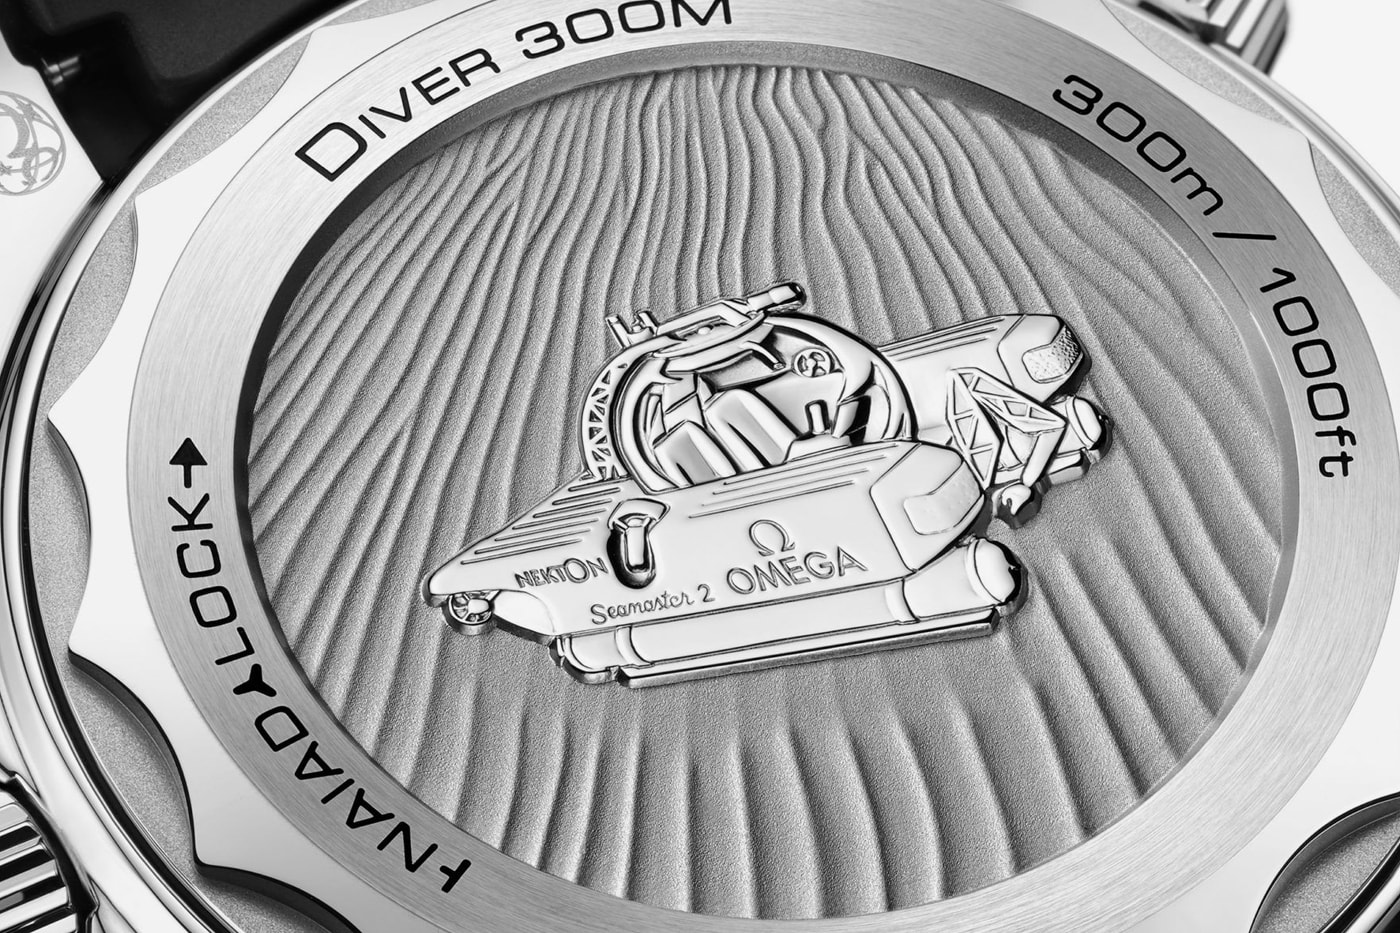 OMEGA Seamaster Diver 300M Nekton Edition Watch Info watches ocean indian ocean Sir Peter Blake conservation swiss watches 